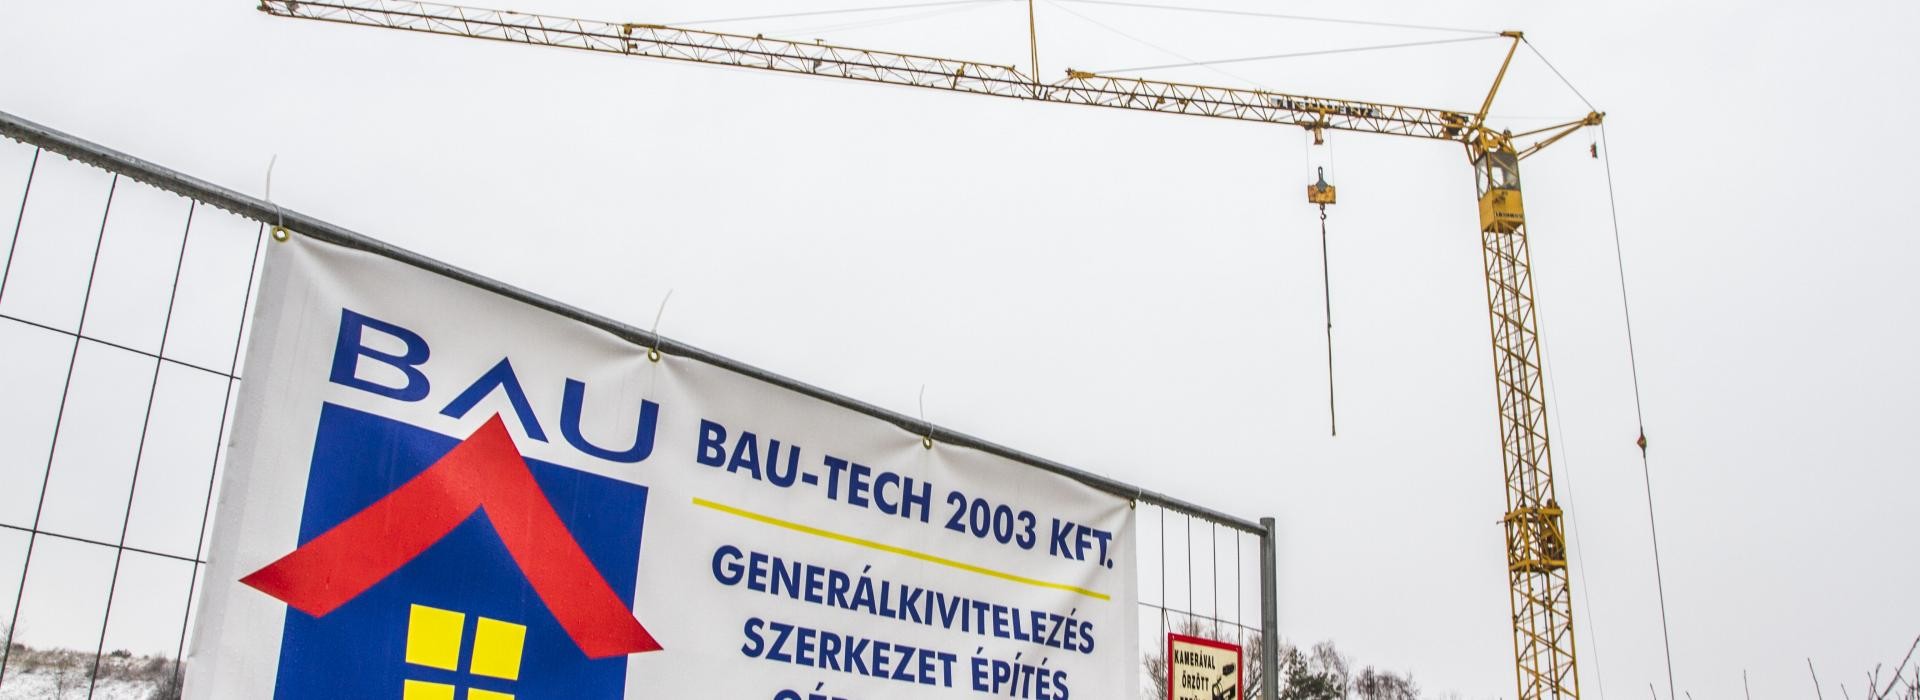 BAU-TECH 2003 Építőipari Kft.